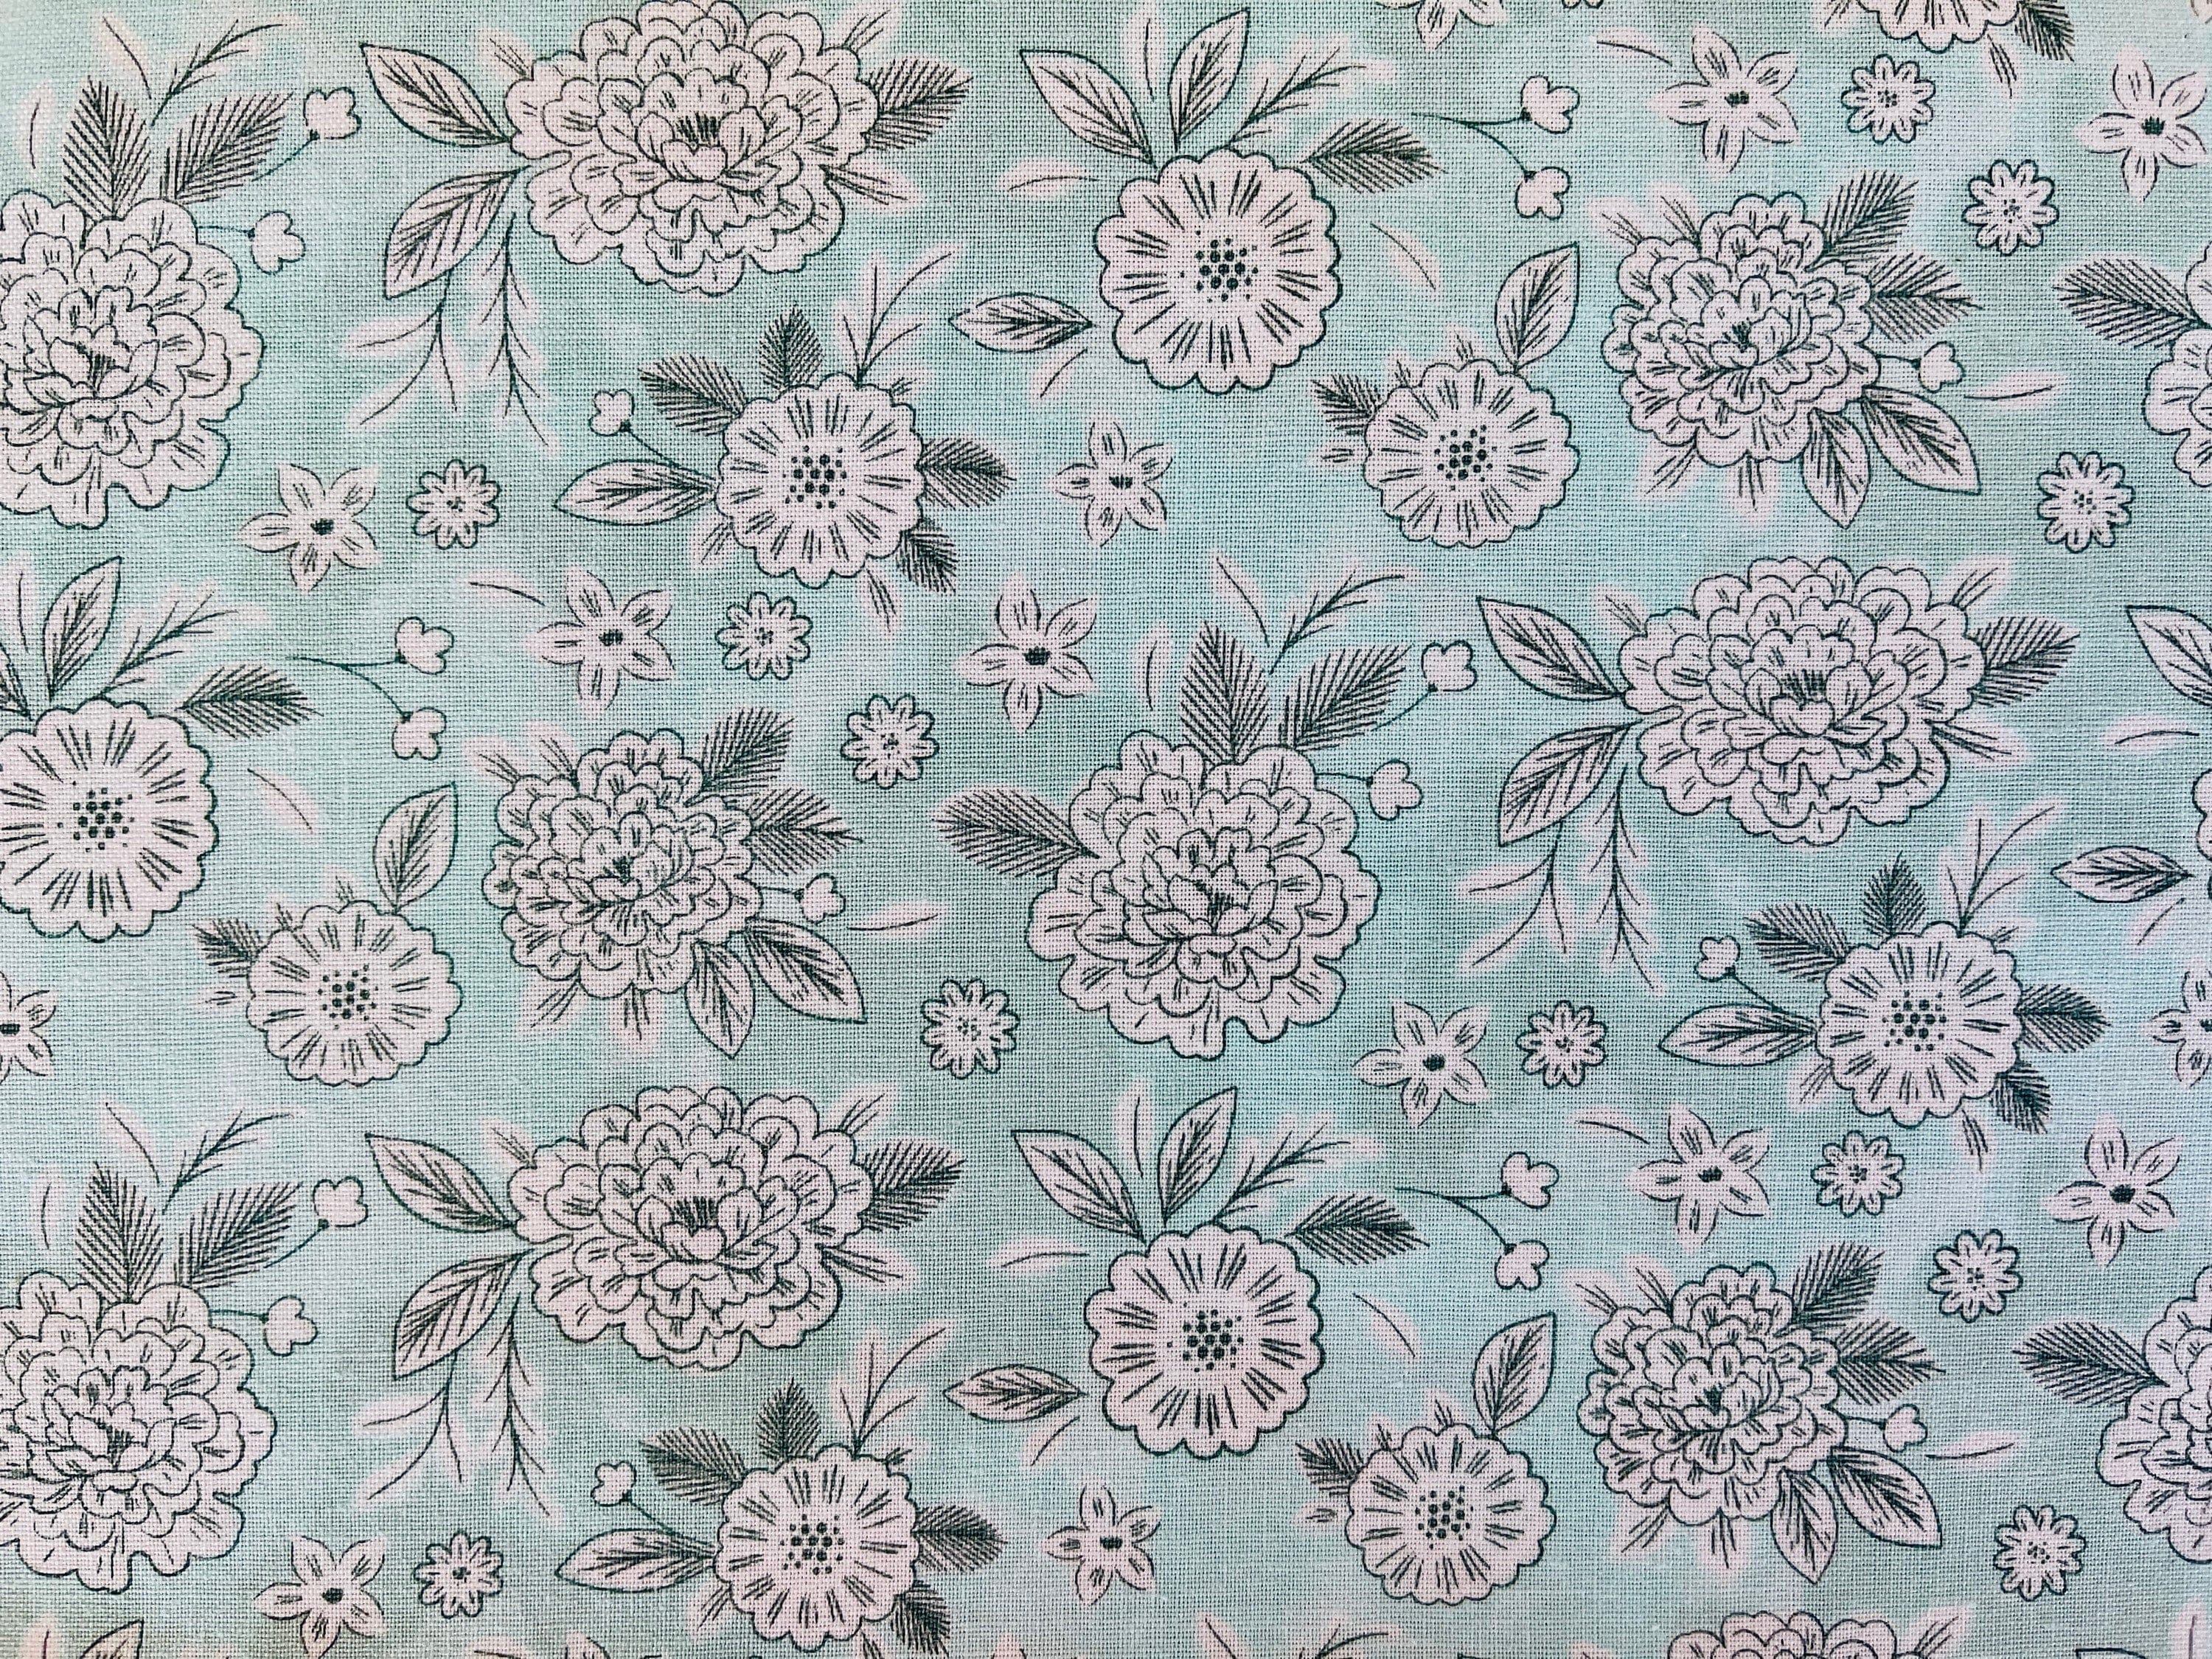 Earth Magic - Flower Dream - Magic Fabric - Erin McManness - Cotton + Steel - Quilting Cotton Fabric - EM103-MA1